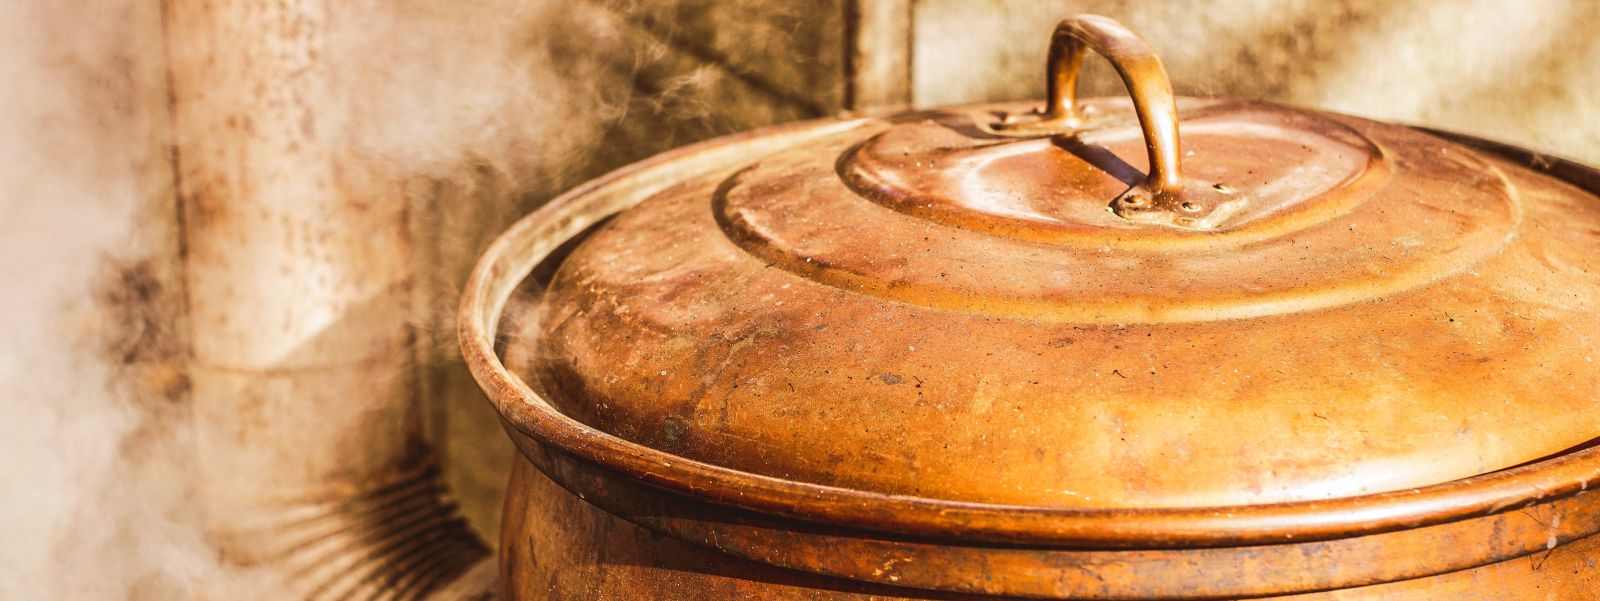 Copper jam pot